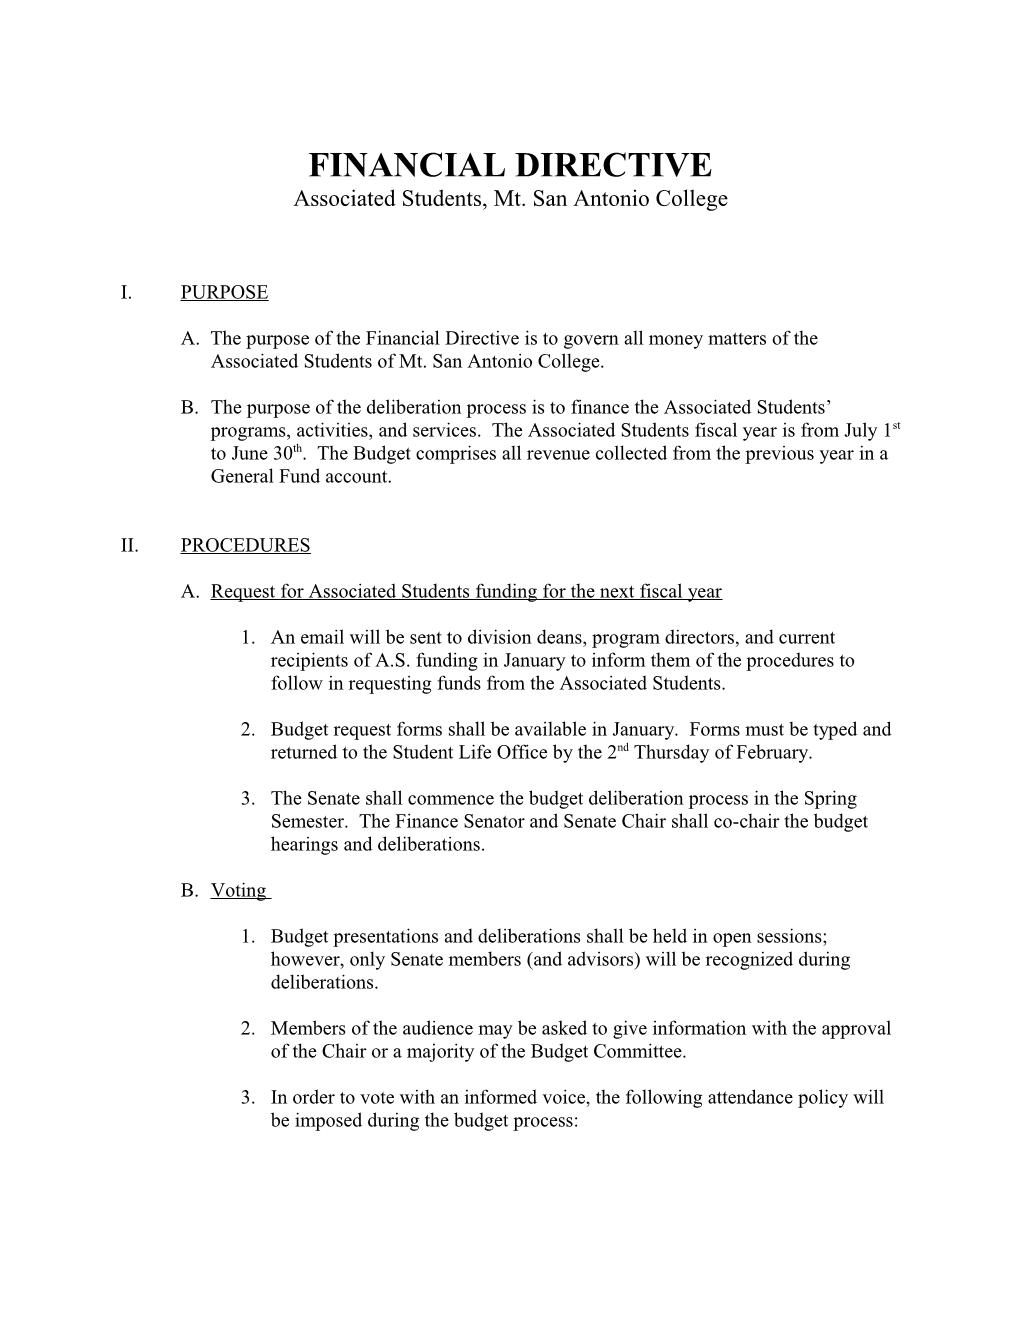 Financial Directive